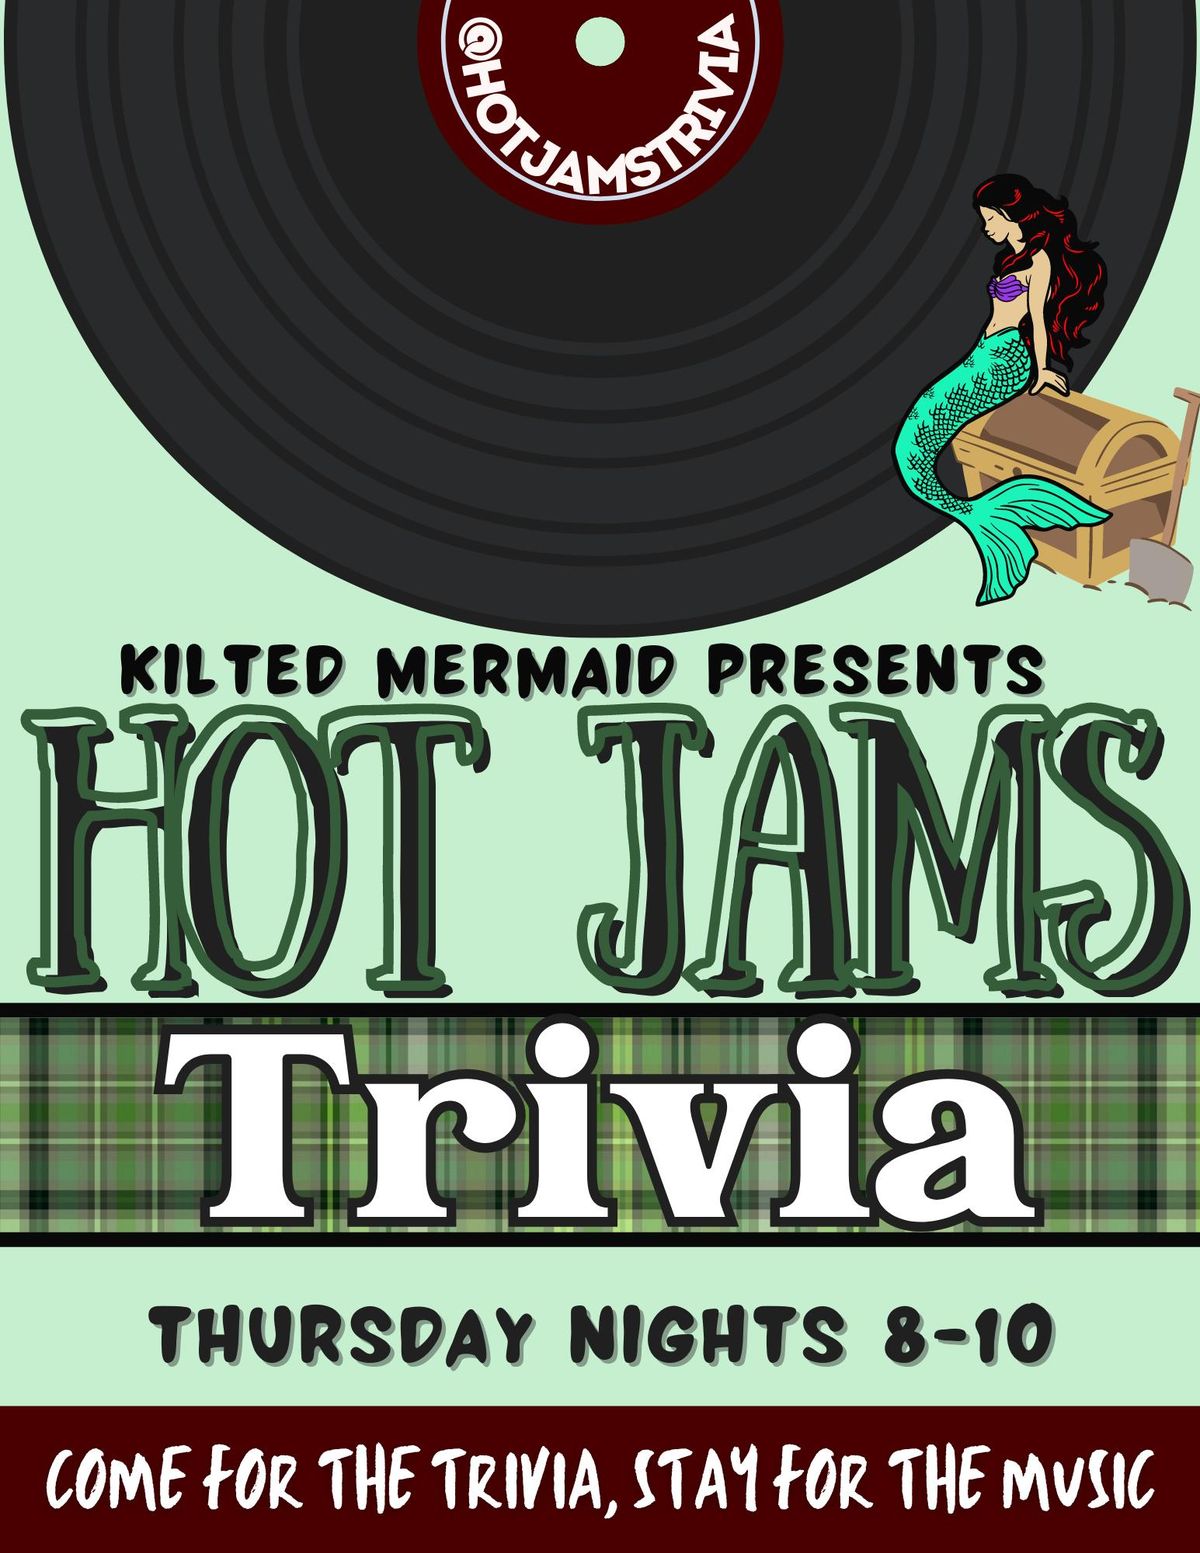 Kilted Mermaid Trivia Night hosted by Hot Jams Trivia